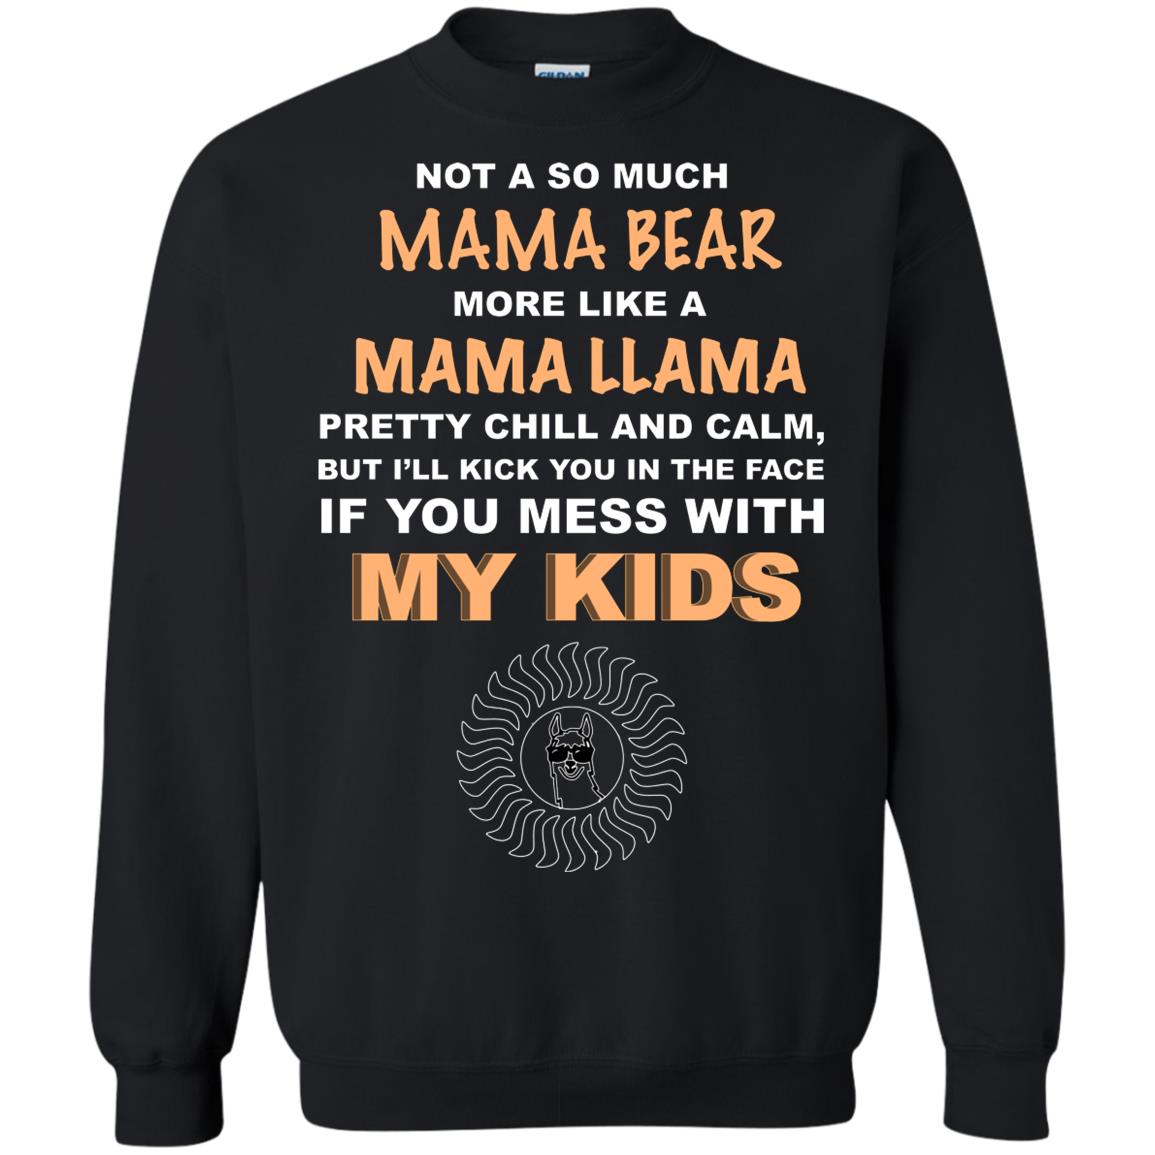 Mama Bear More Like Mama Llama Pretty Chill And Calm But I'll Kicj You In The Face If You Mess With My KidsG180 Gildan Crewneck Pullover Sweatshirt 8 oz.